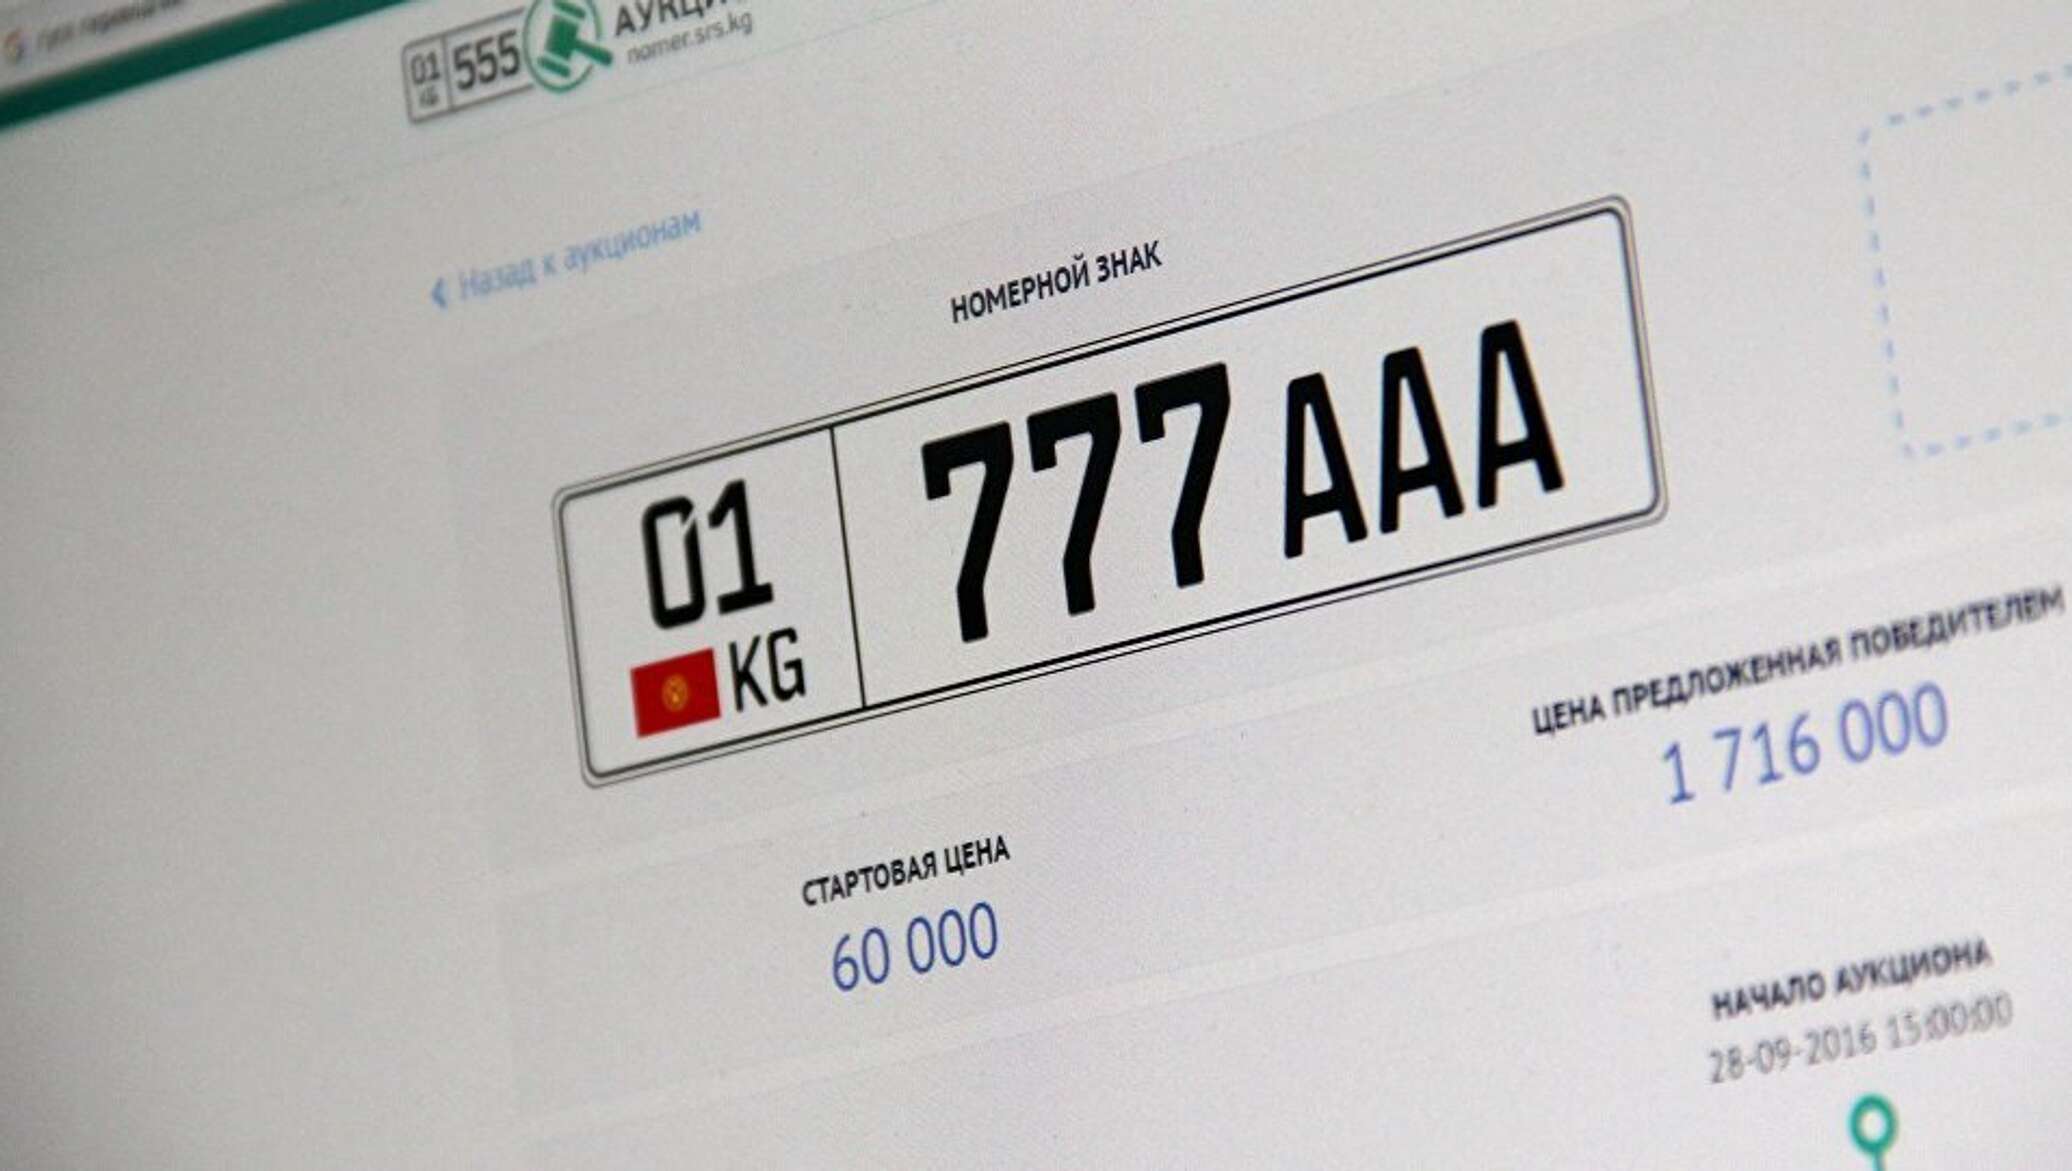 Сайт 1 777. Номерные знаки Кыргызстана. ААА автомобильные номера. Крутые номера Кыргызстана. Кыргызские гос номера.